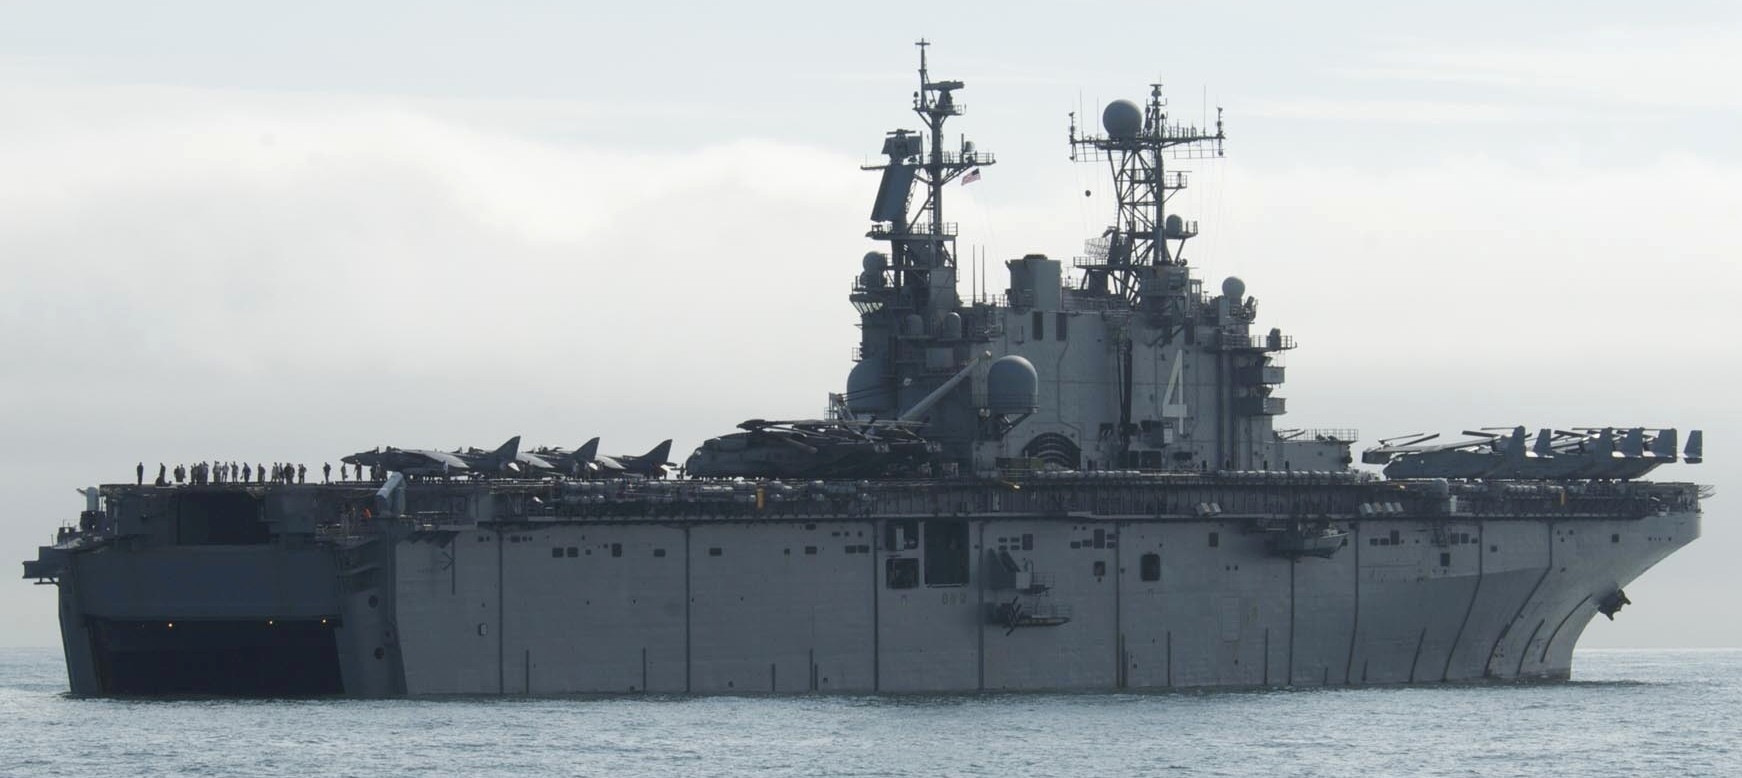 lha-4 uss nassau tarawa class amphibious assault ship us navy 44